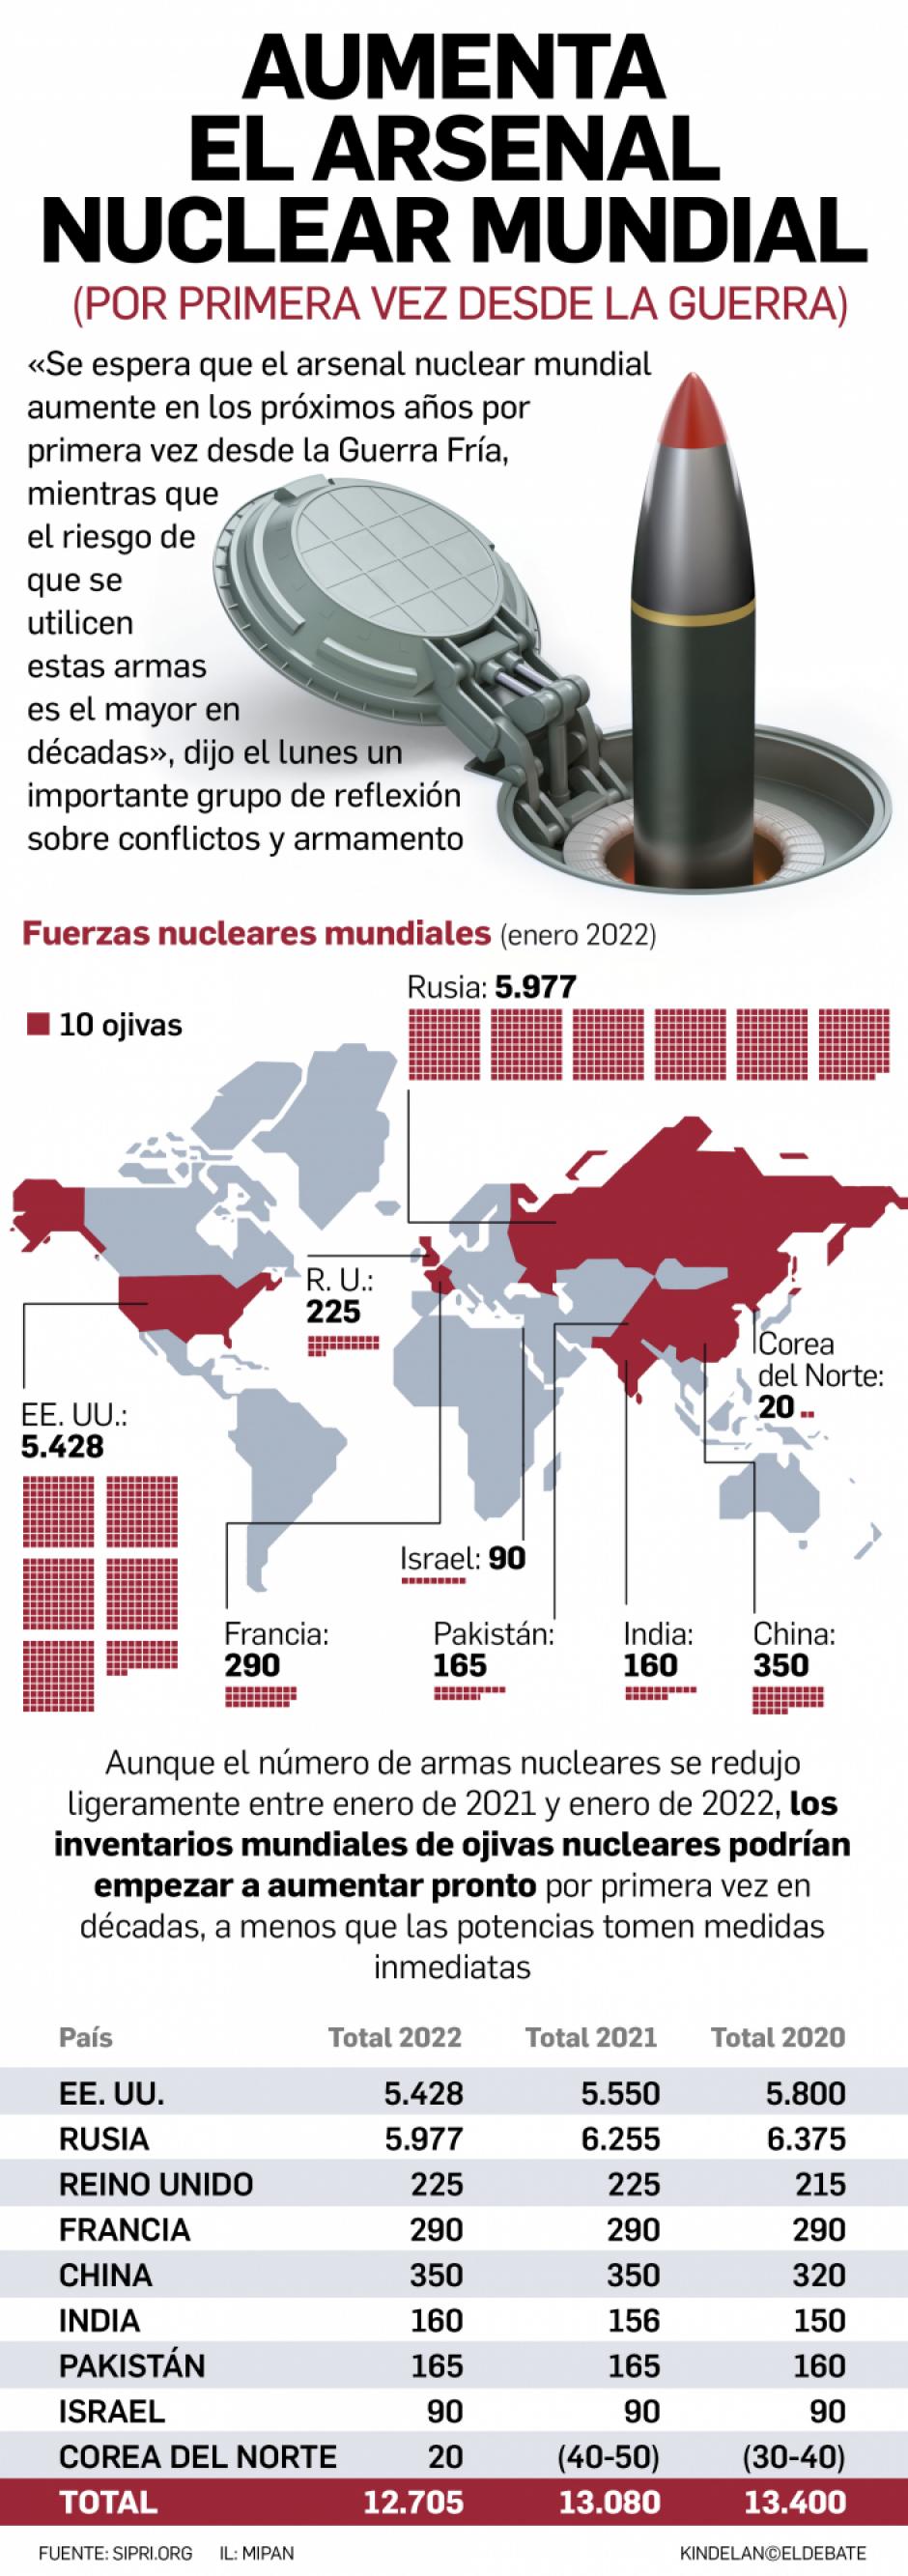 El arsenal nuclear global